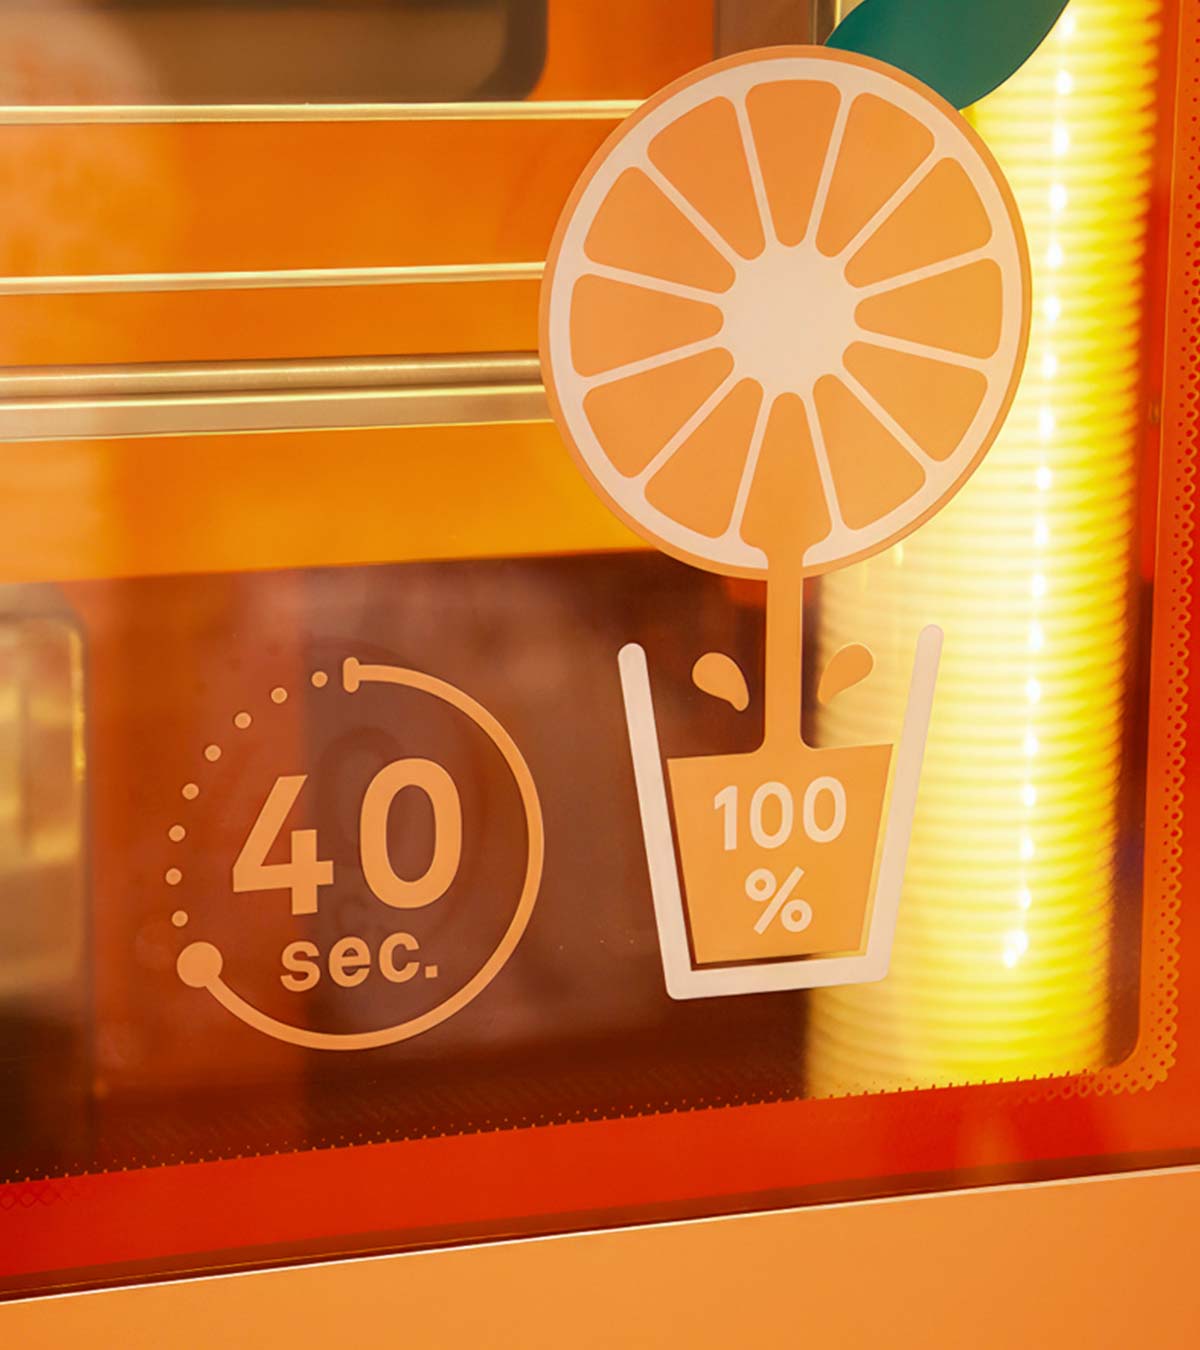 Feed ME Orange vending machine picture